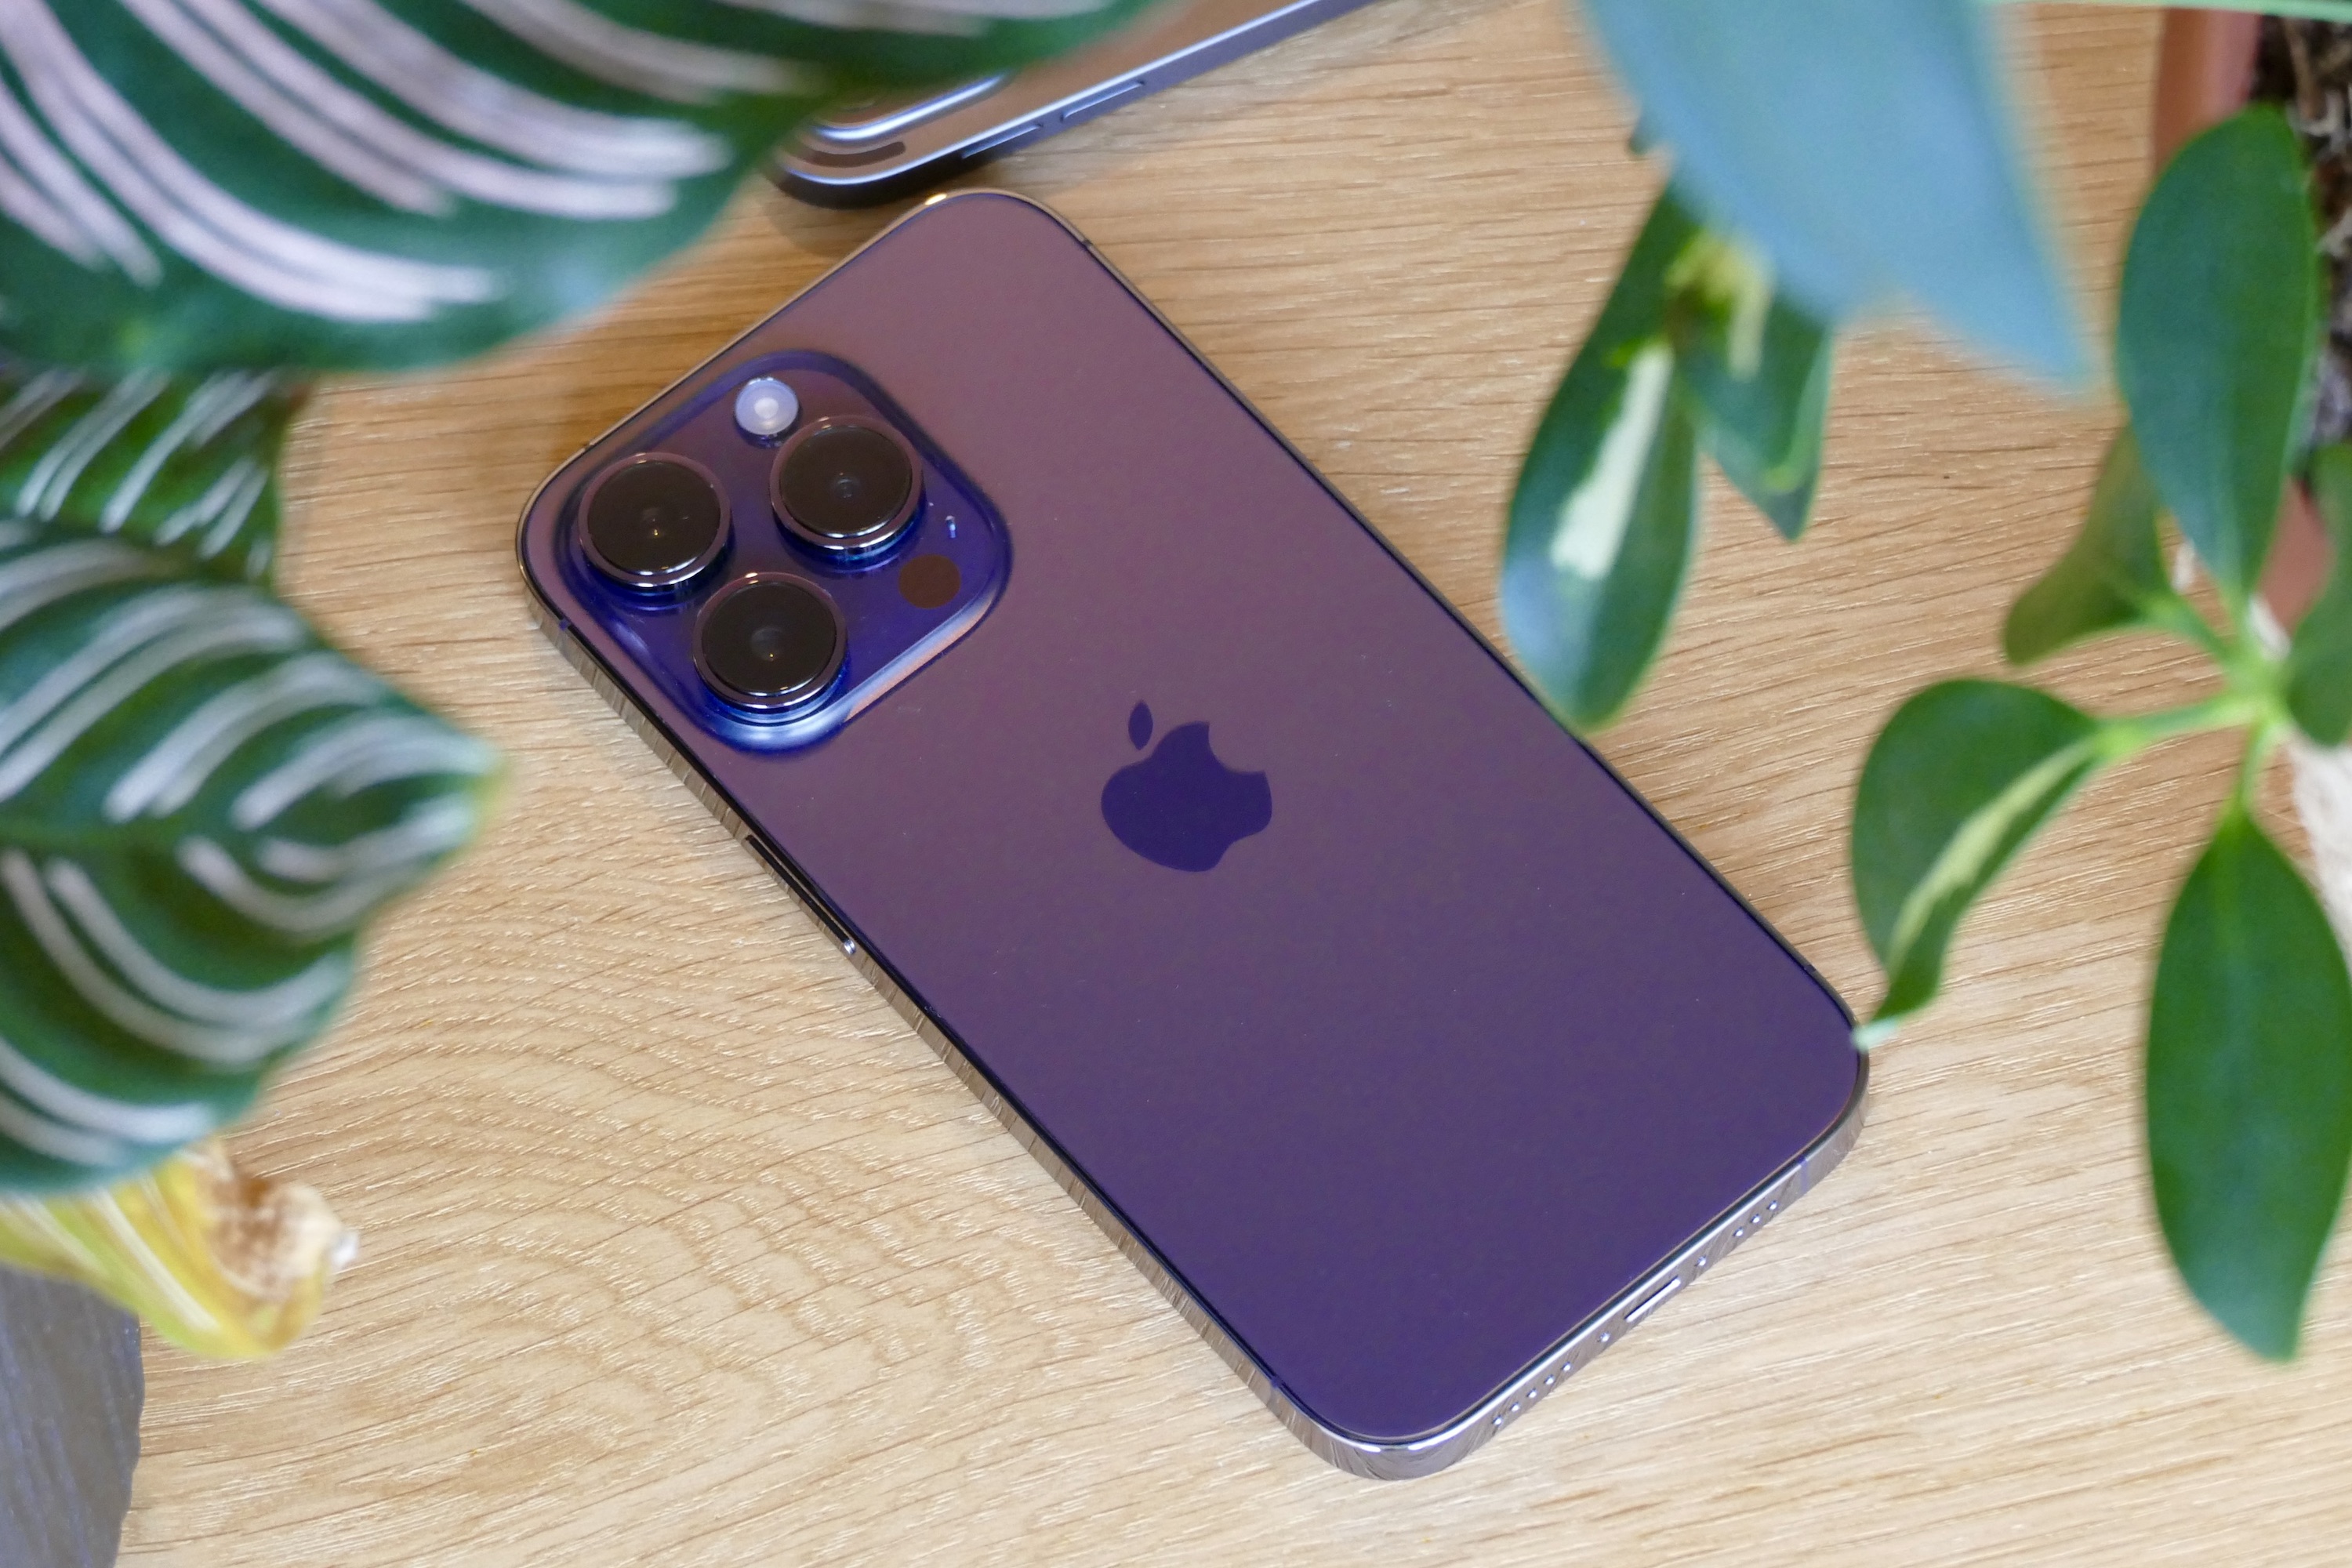 The Deep Purple color iPhone 14 Pro.